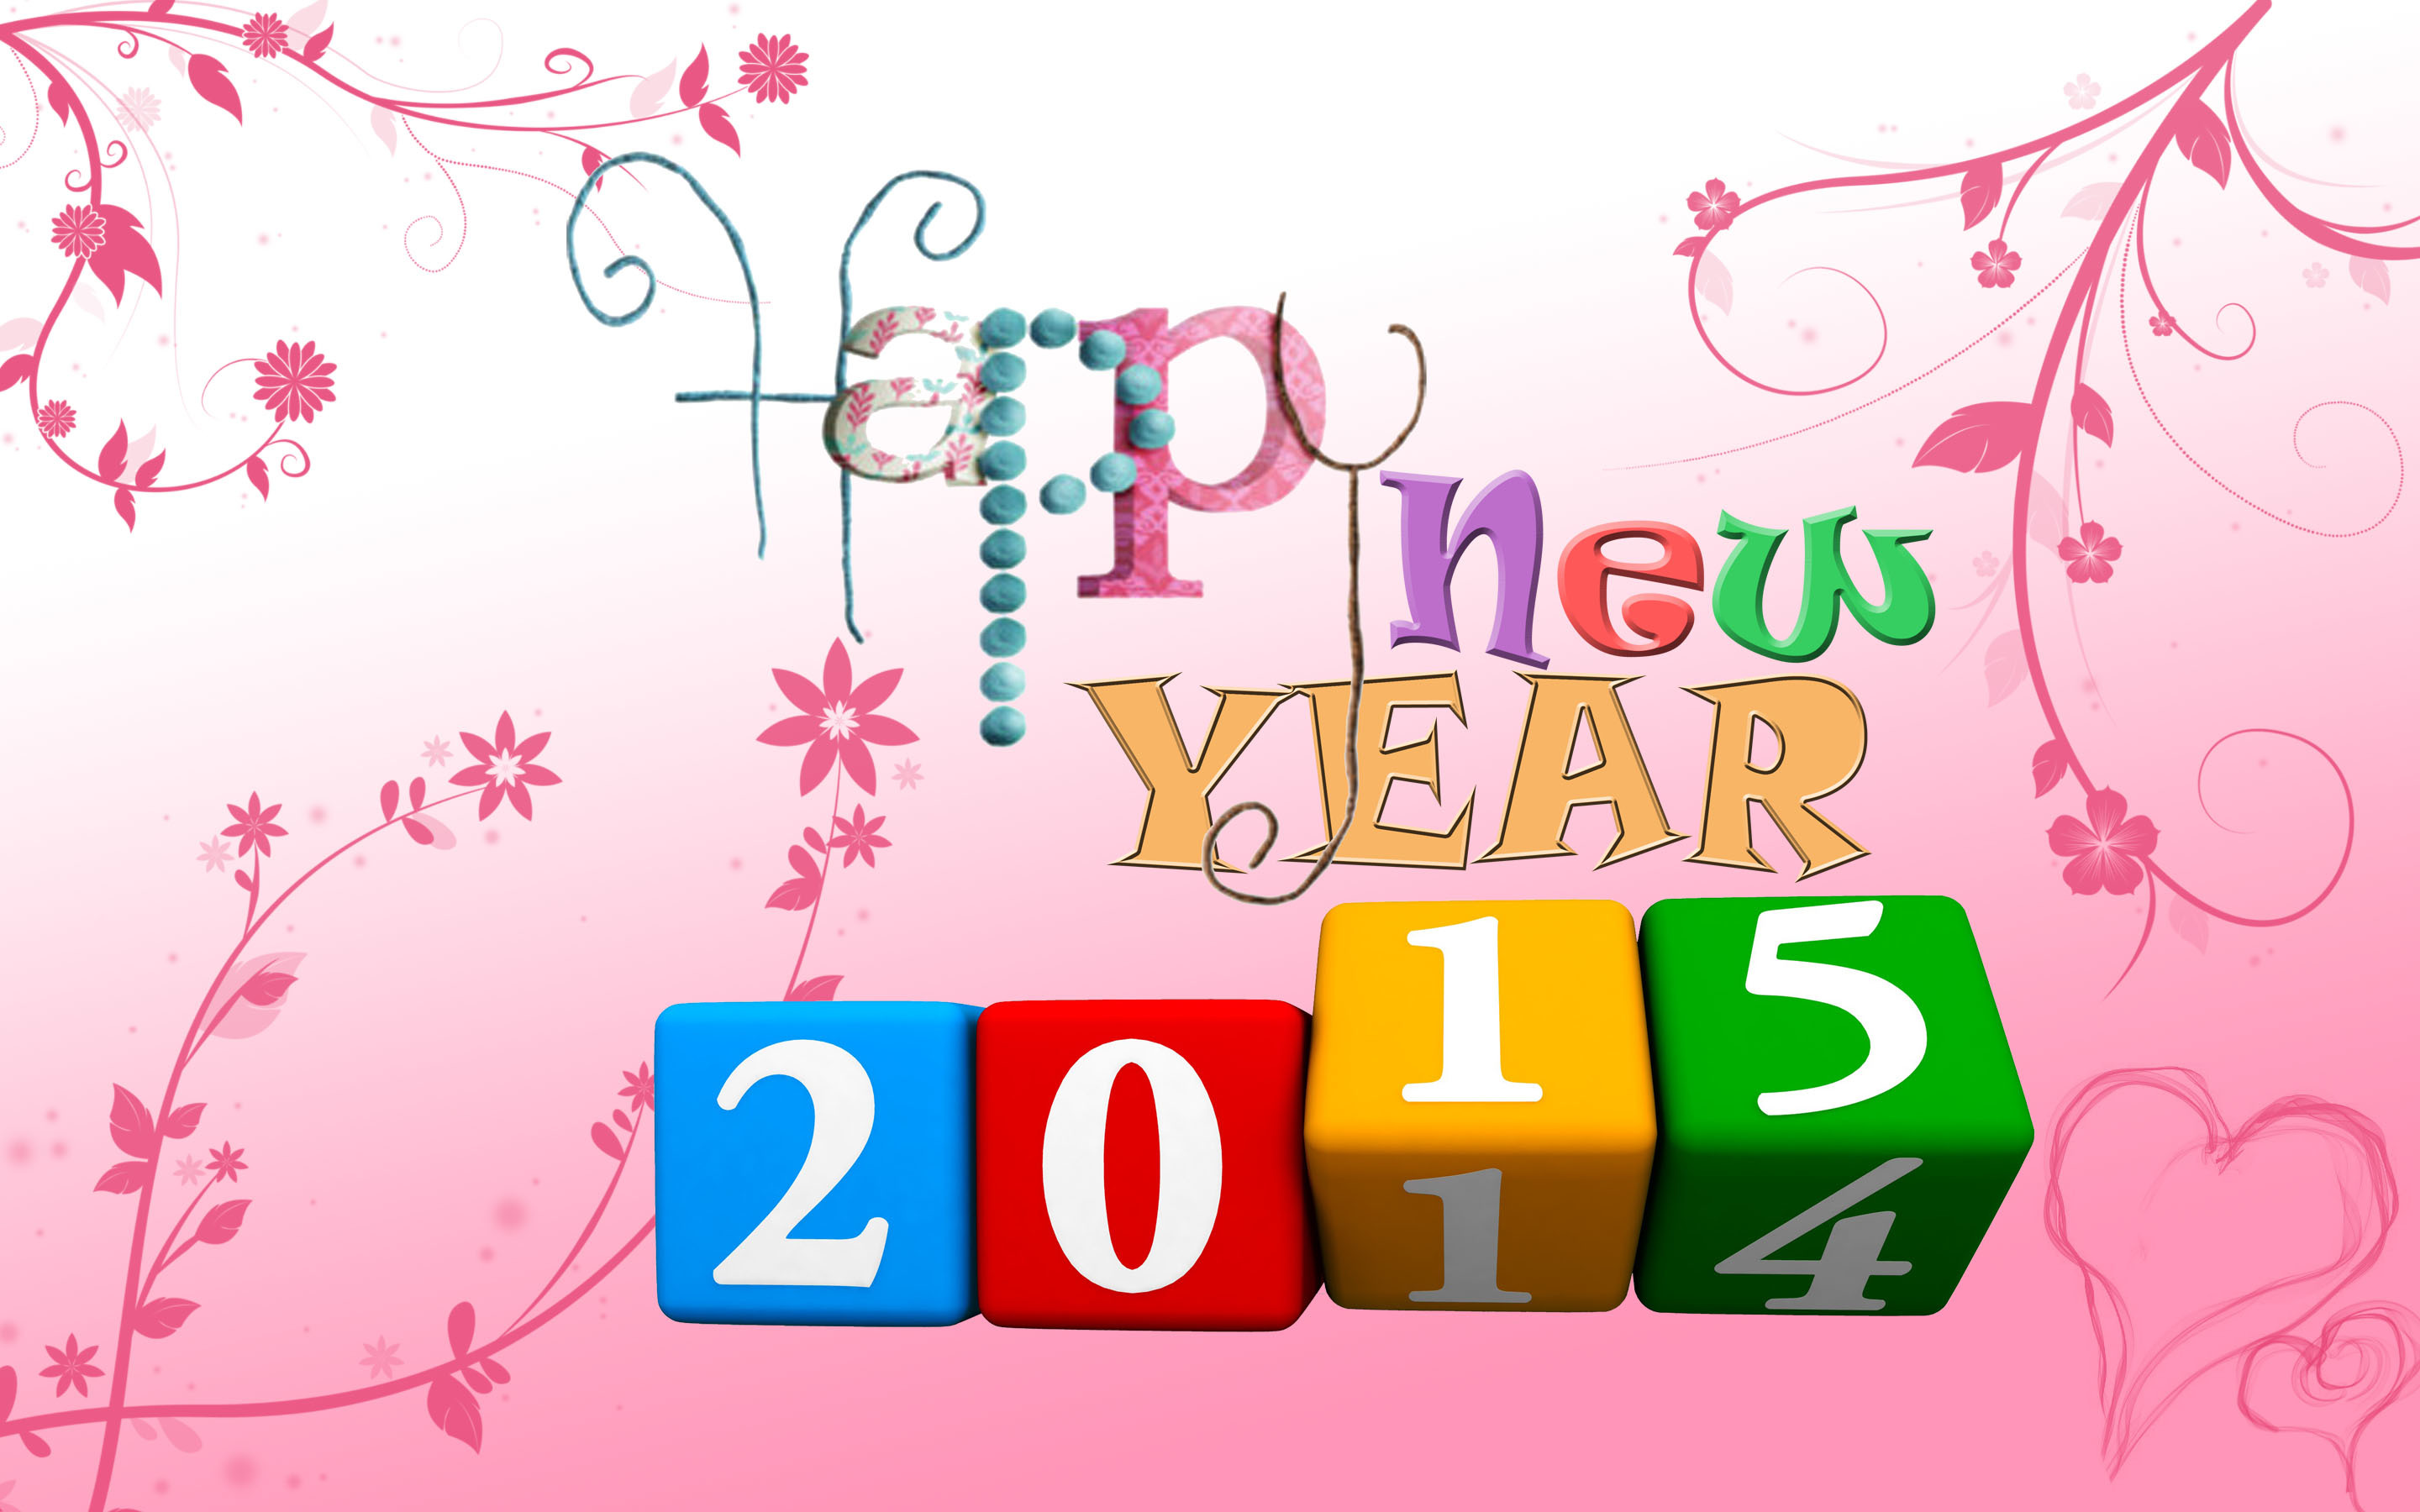 happy-new-year-2015-holiday-hd-wallpaper-2880x1800-30904.jpg